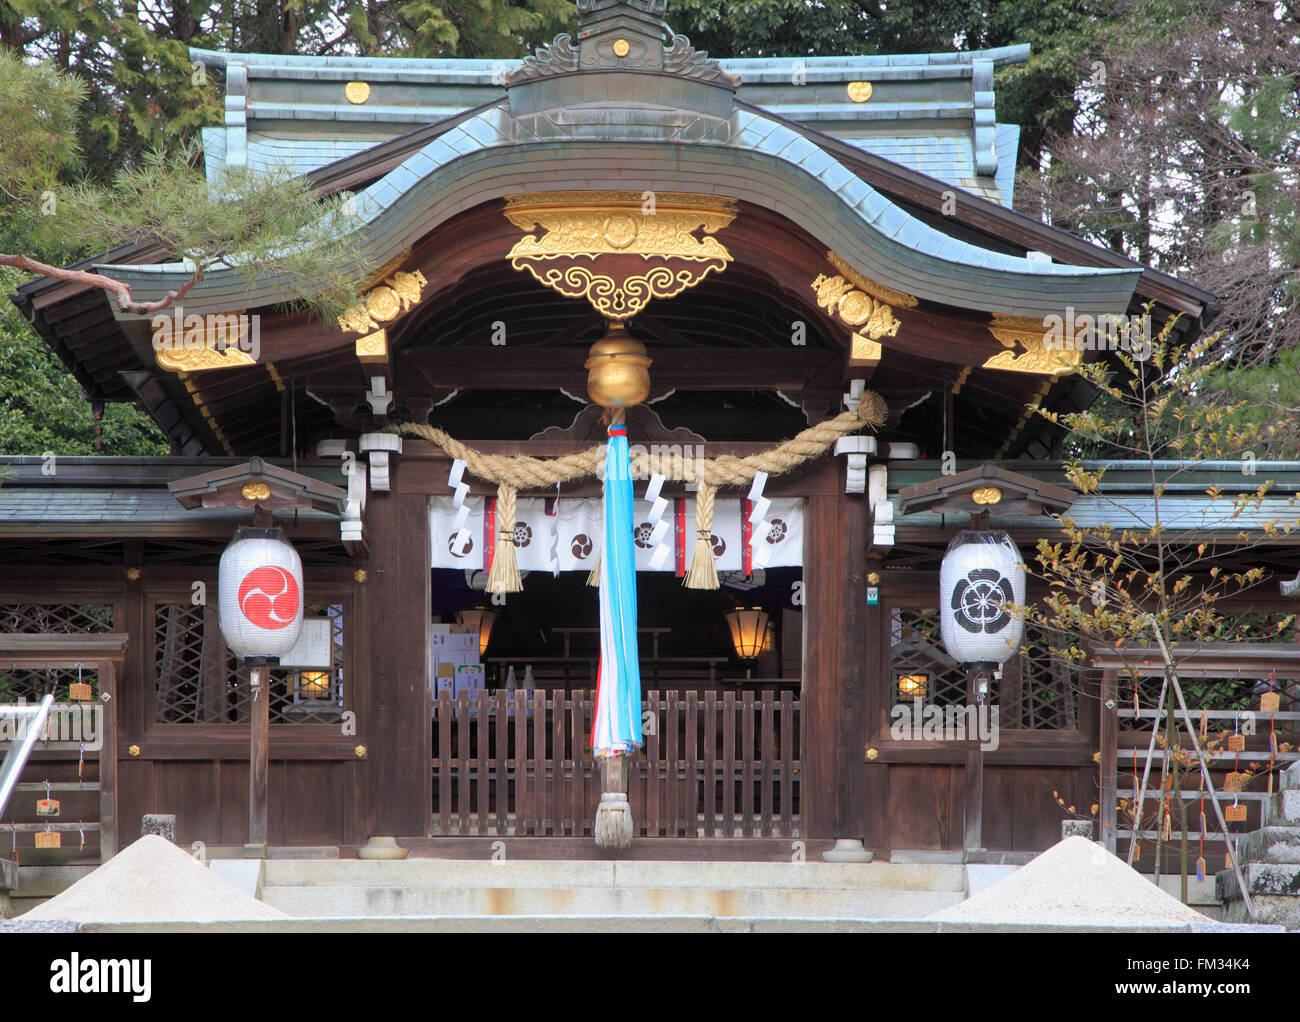 Japan; Kyoto, Hachidai-jinja Shrine, Stock Photo